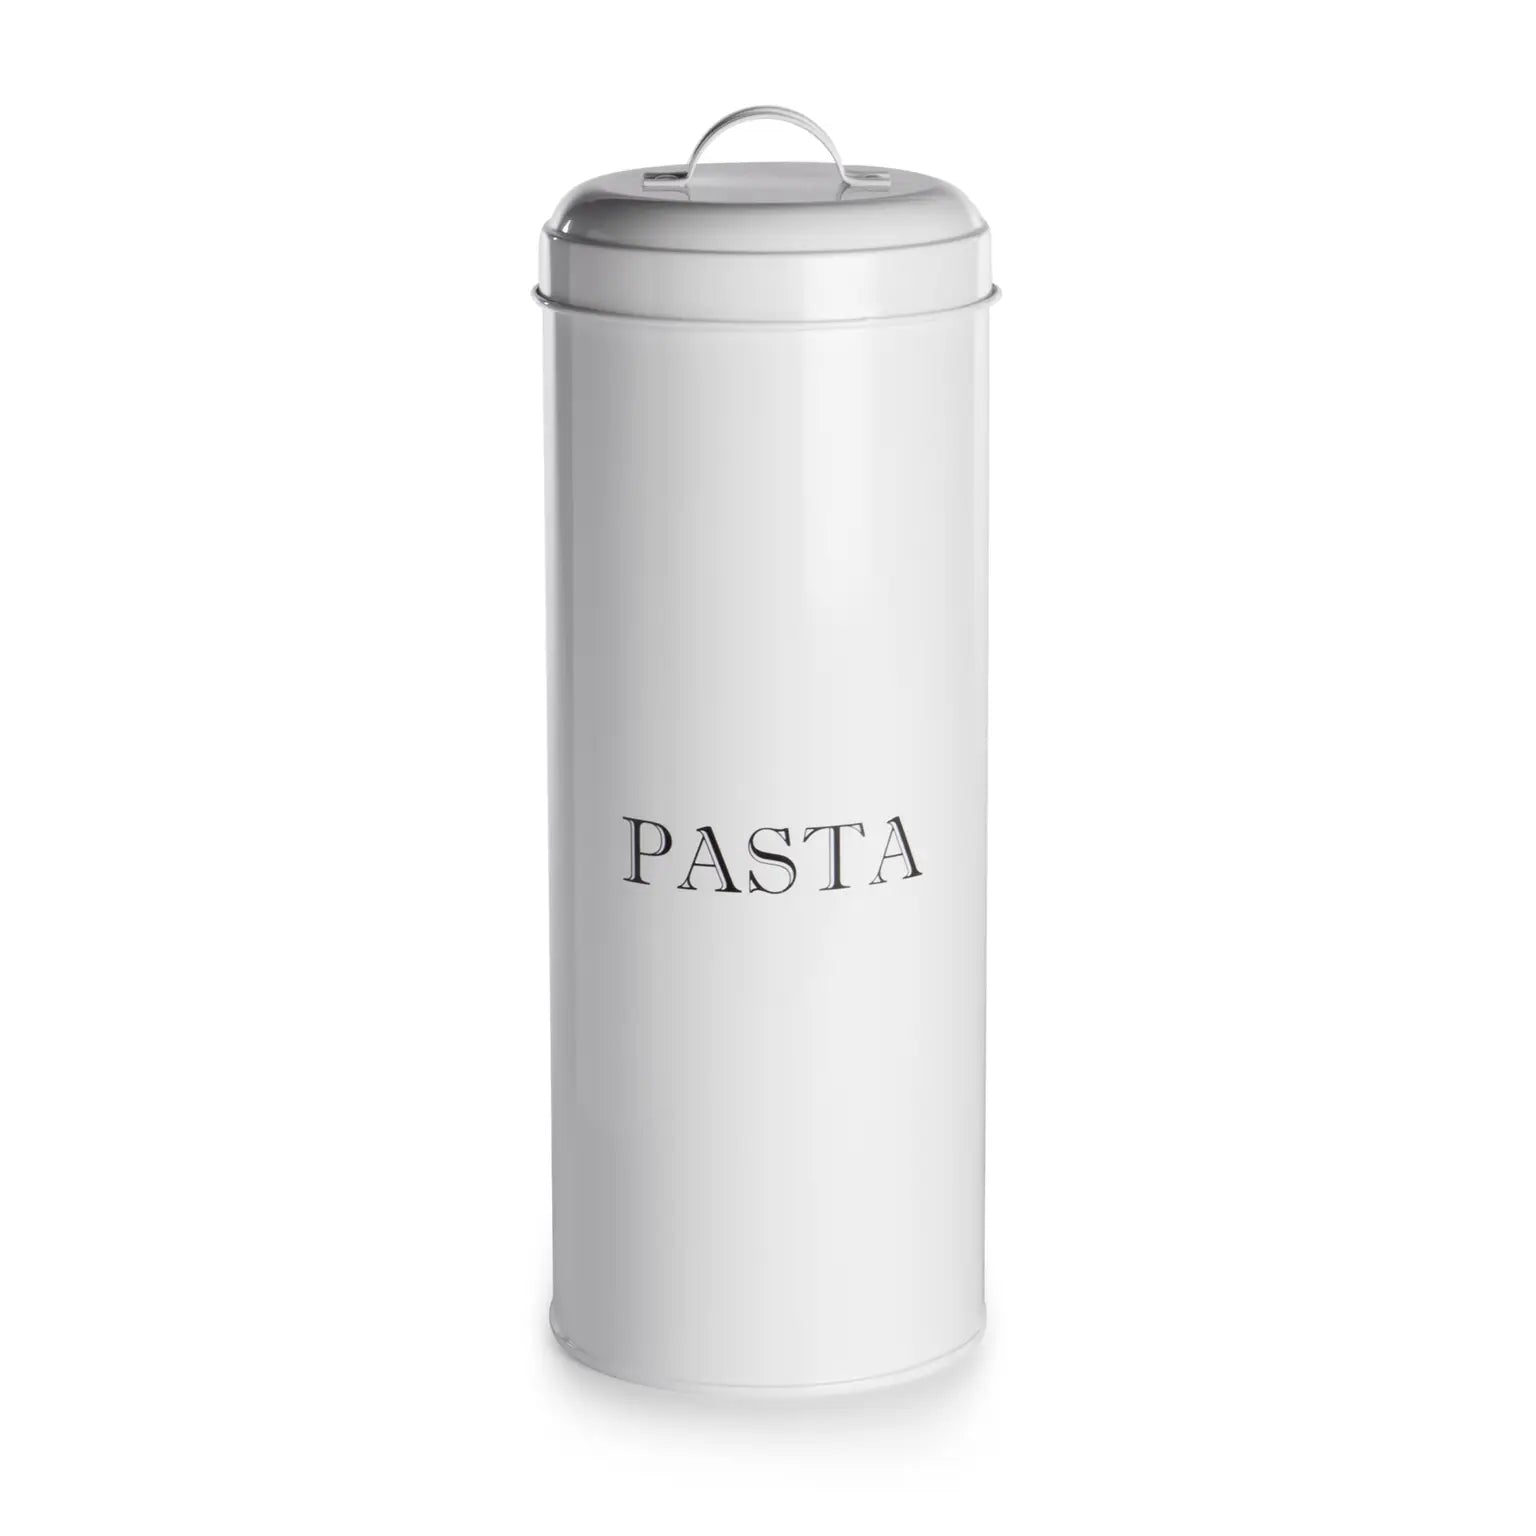 White Pasta Canister